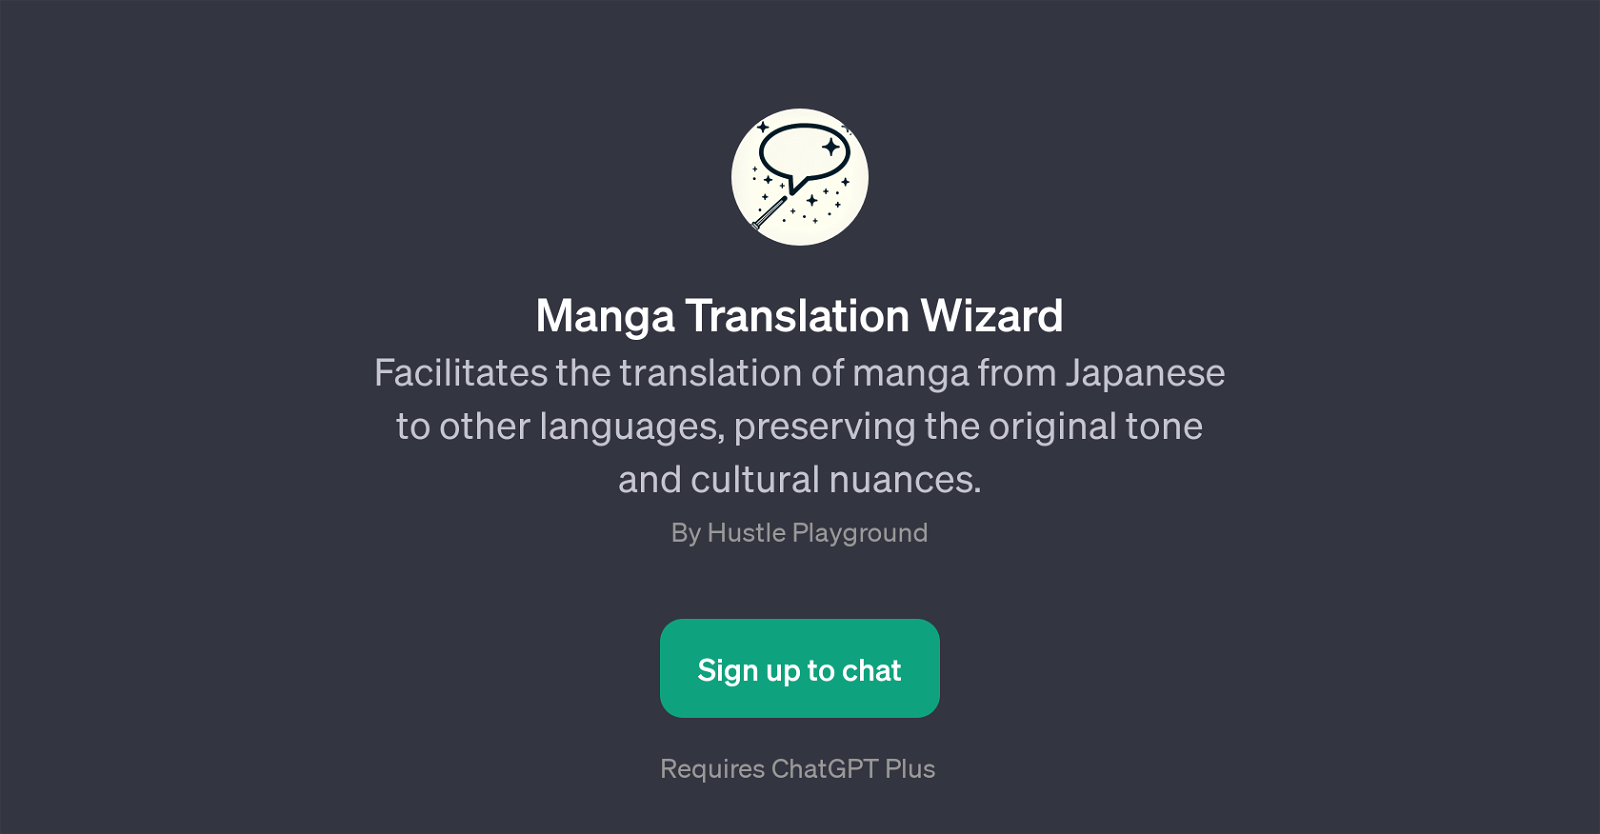 Manga Translation Wizard website